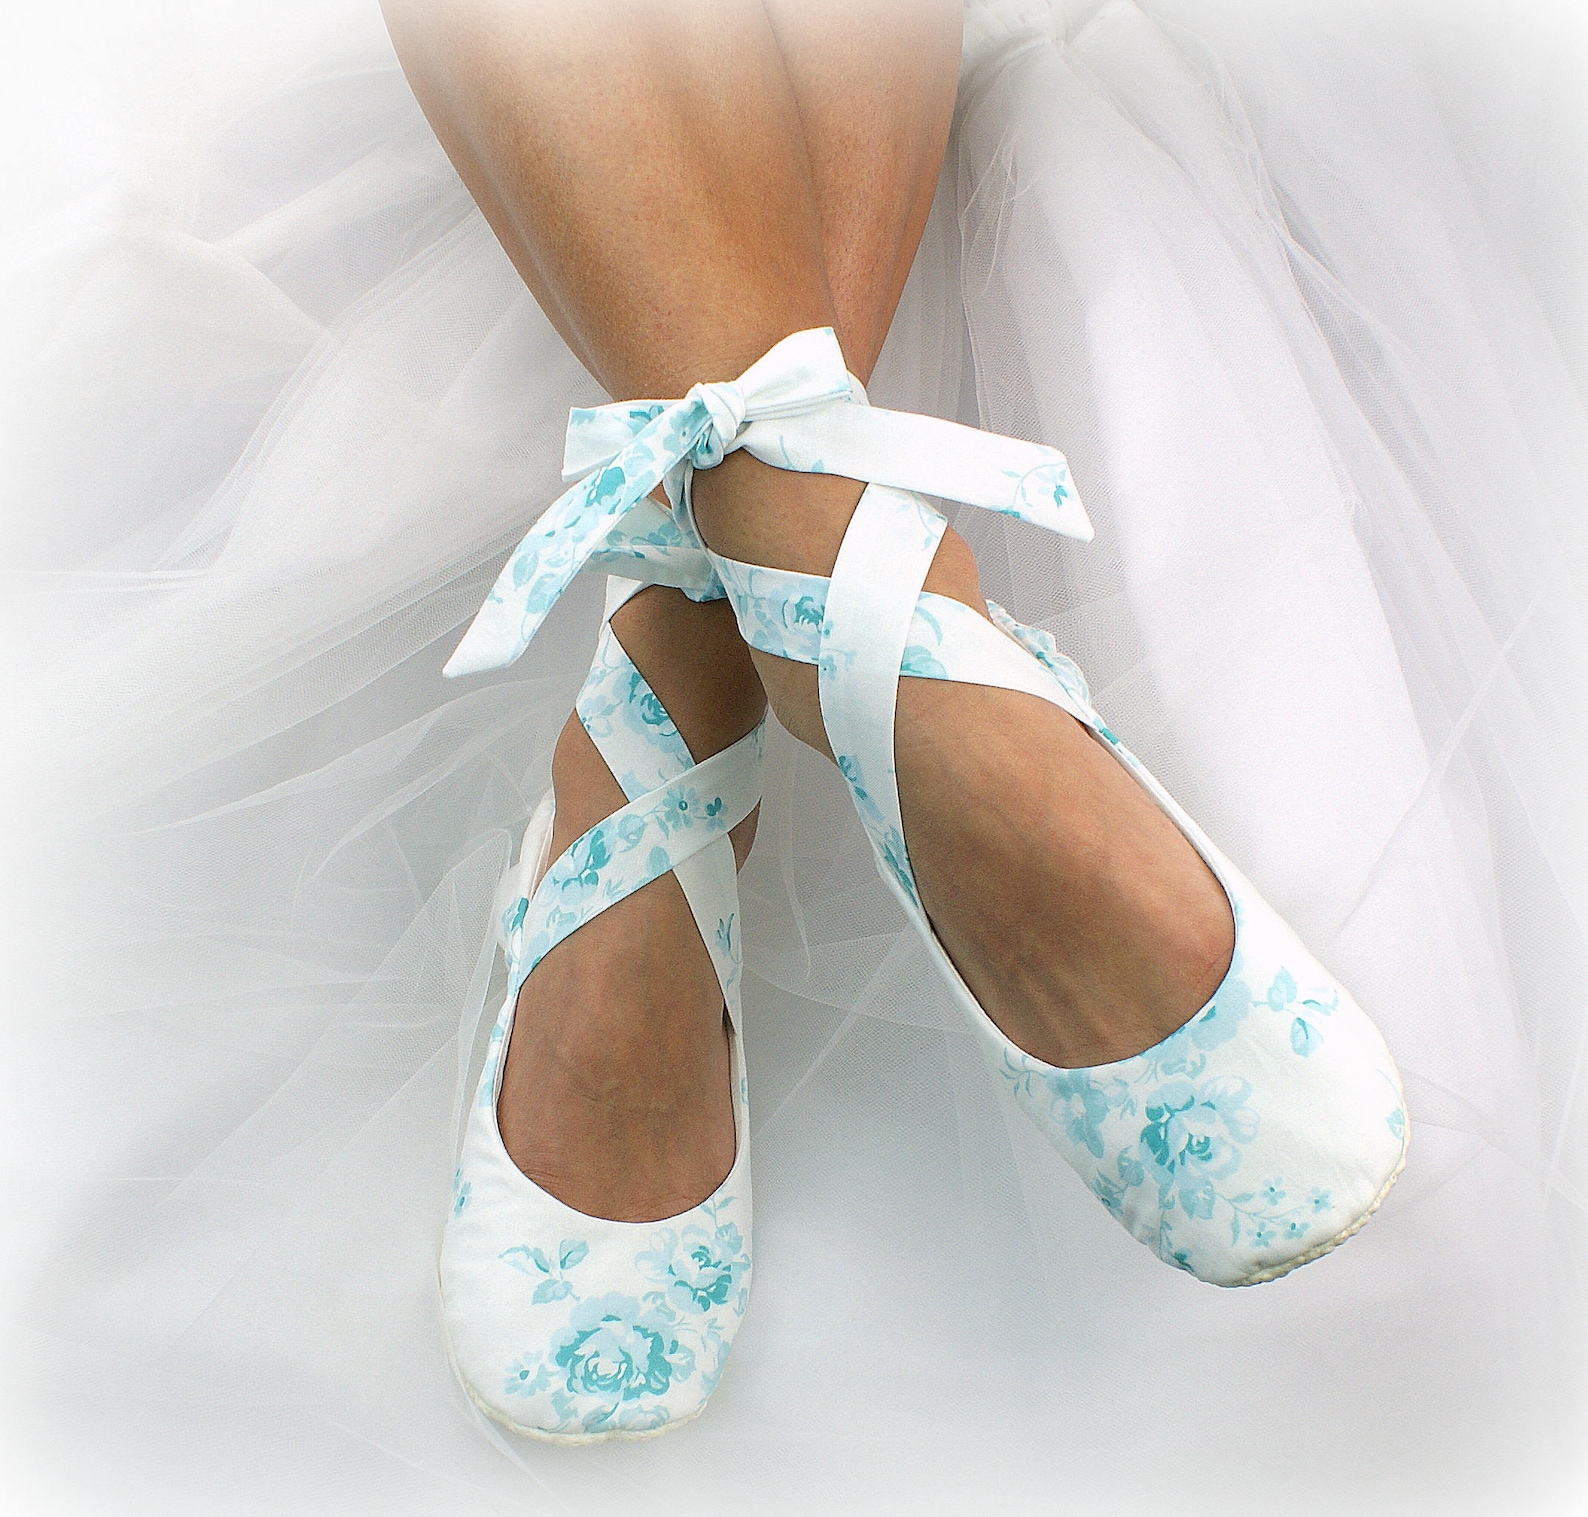 bride ballet slippers teal and white floral blue wedding ballet shoes bridal flats for brides elegant ballerina slippers custom